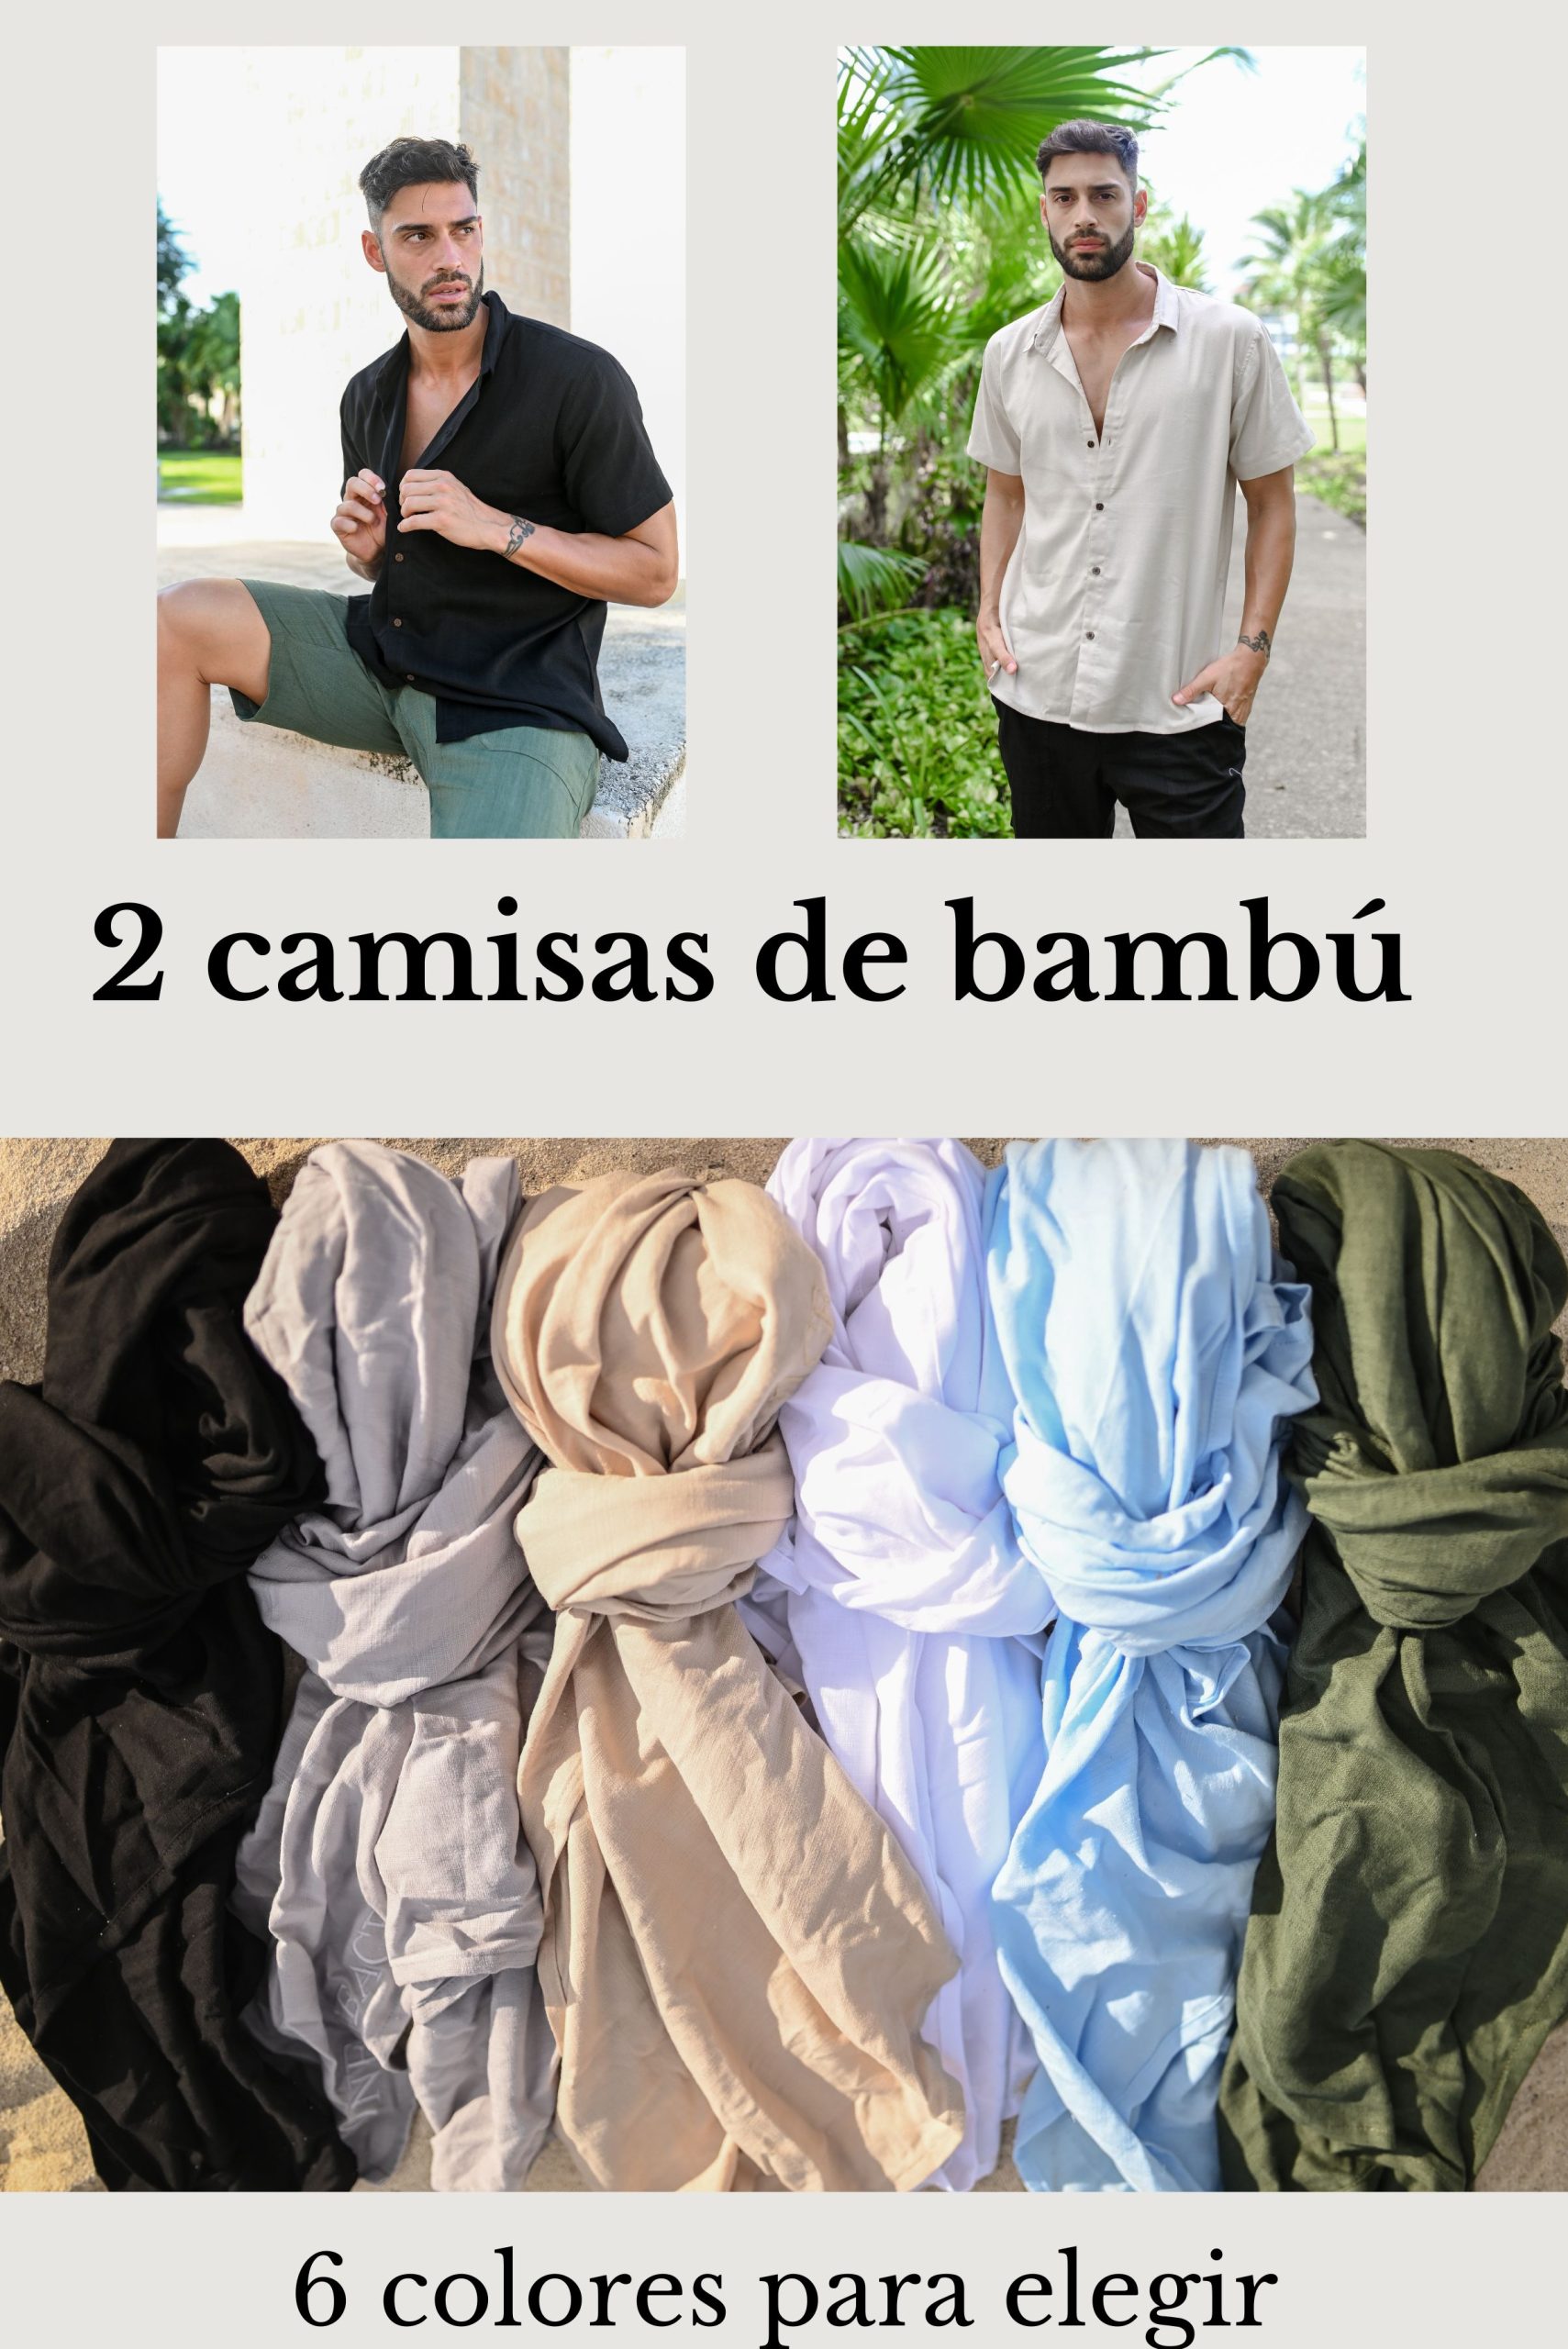 2 camisas de bambú